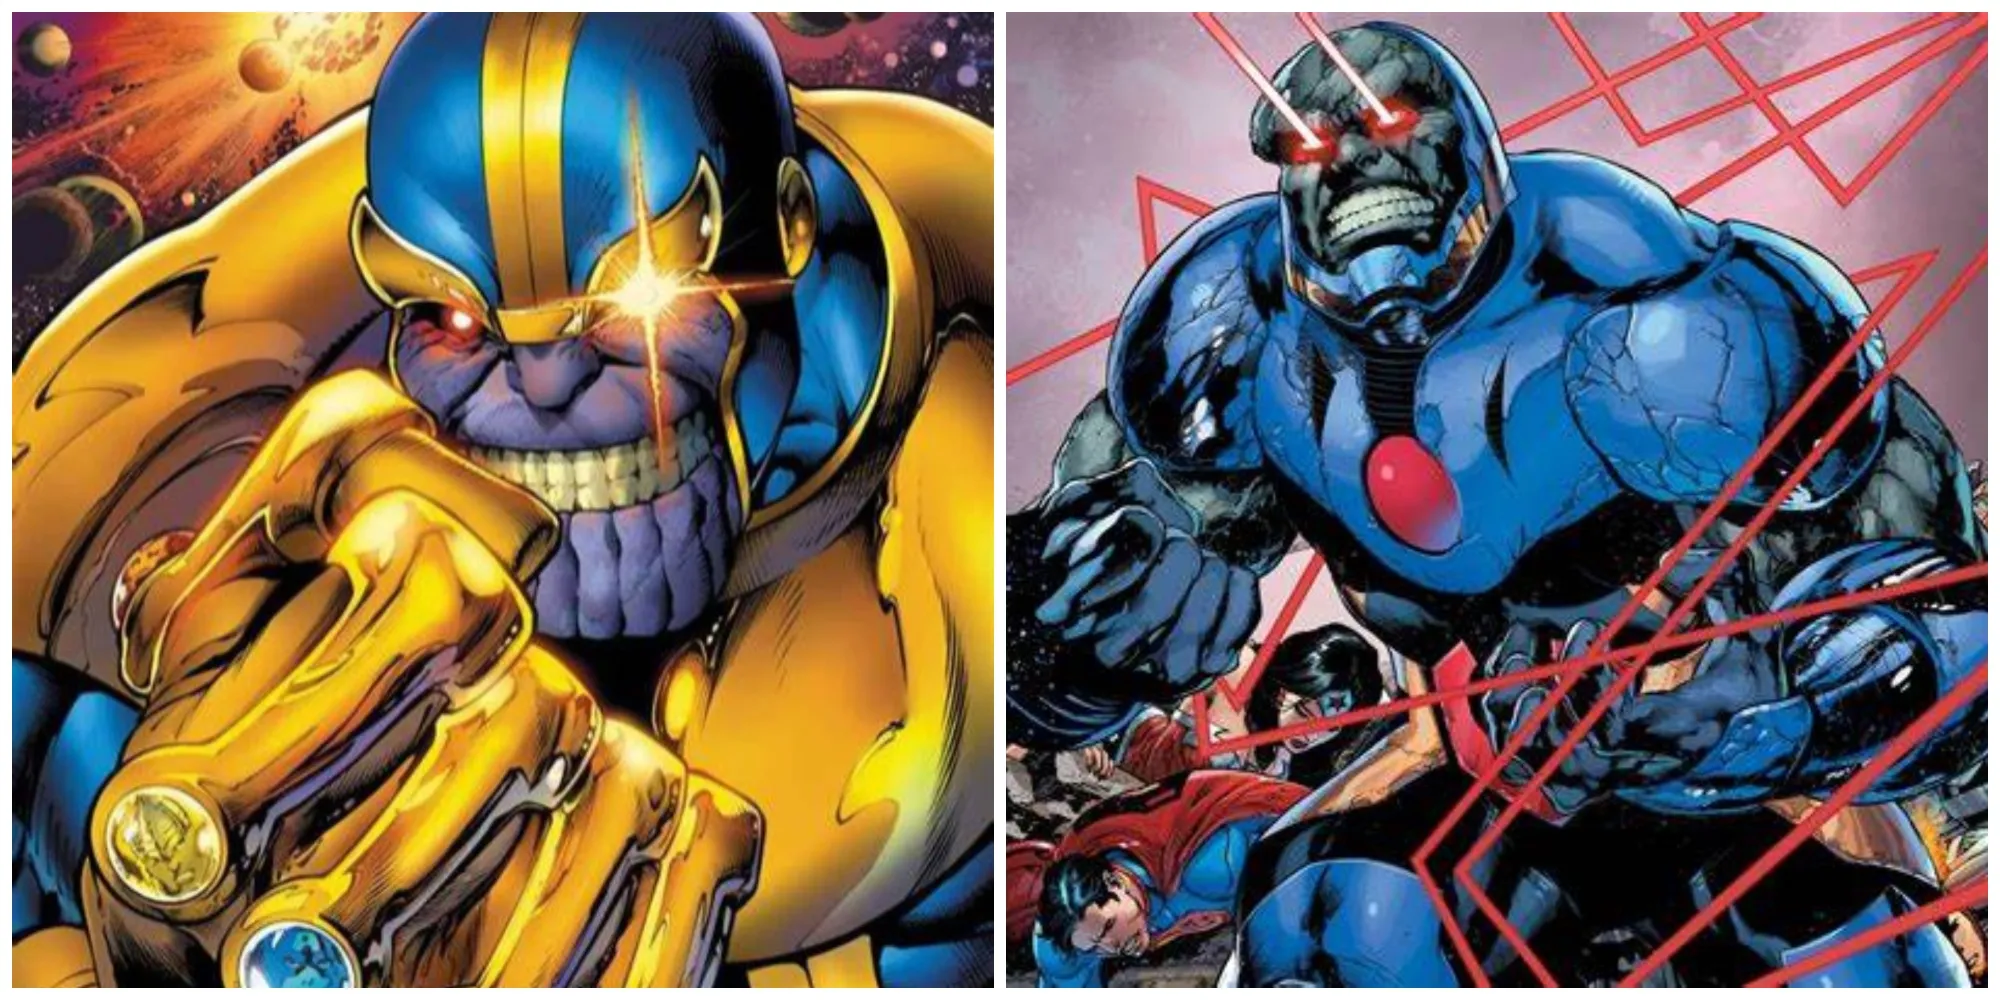 Thanos and Darkseid